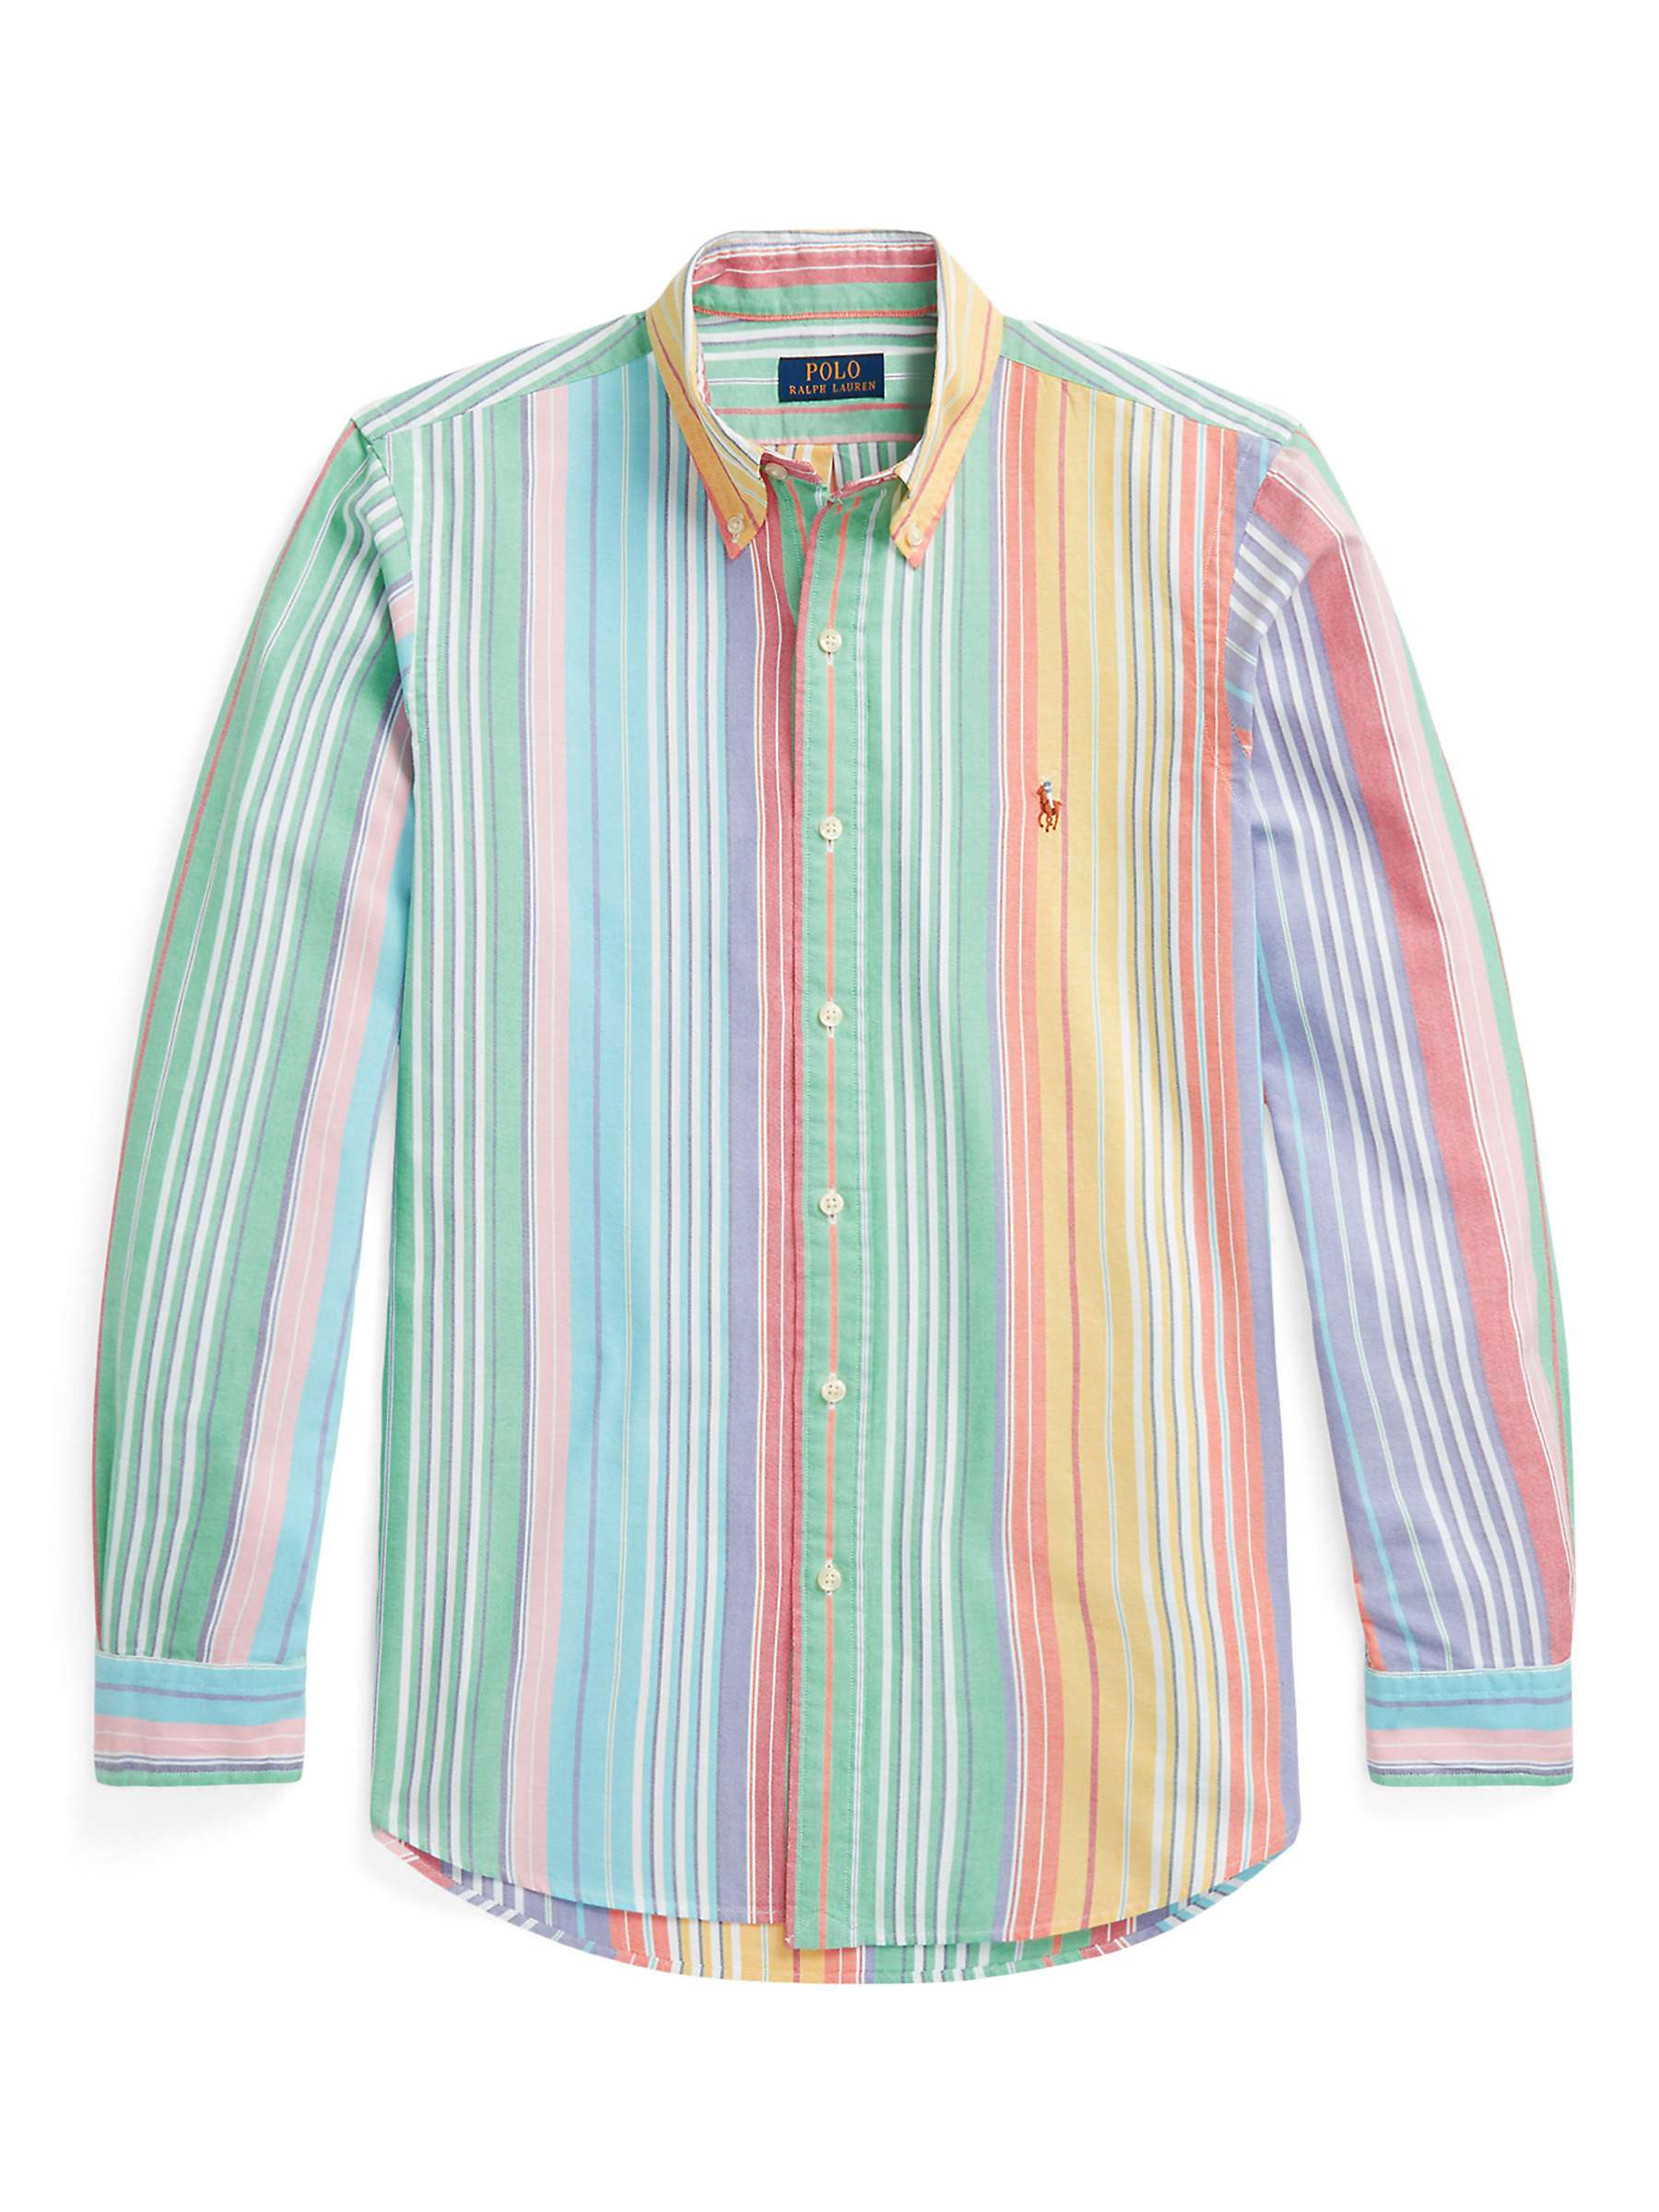 Buy Polo Ralph Lauren Custom Fit Striped Oxford Fun Shirt Online at johnlewis.com